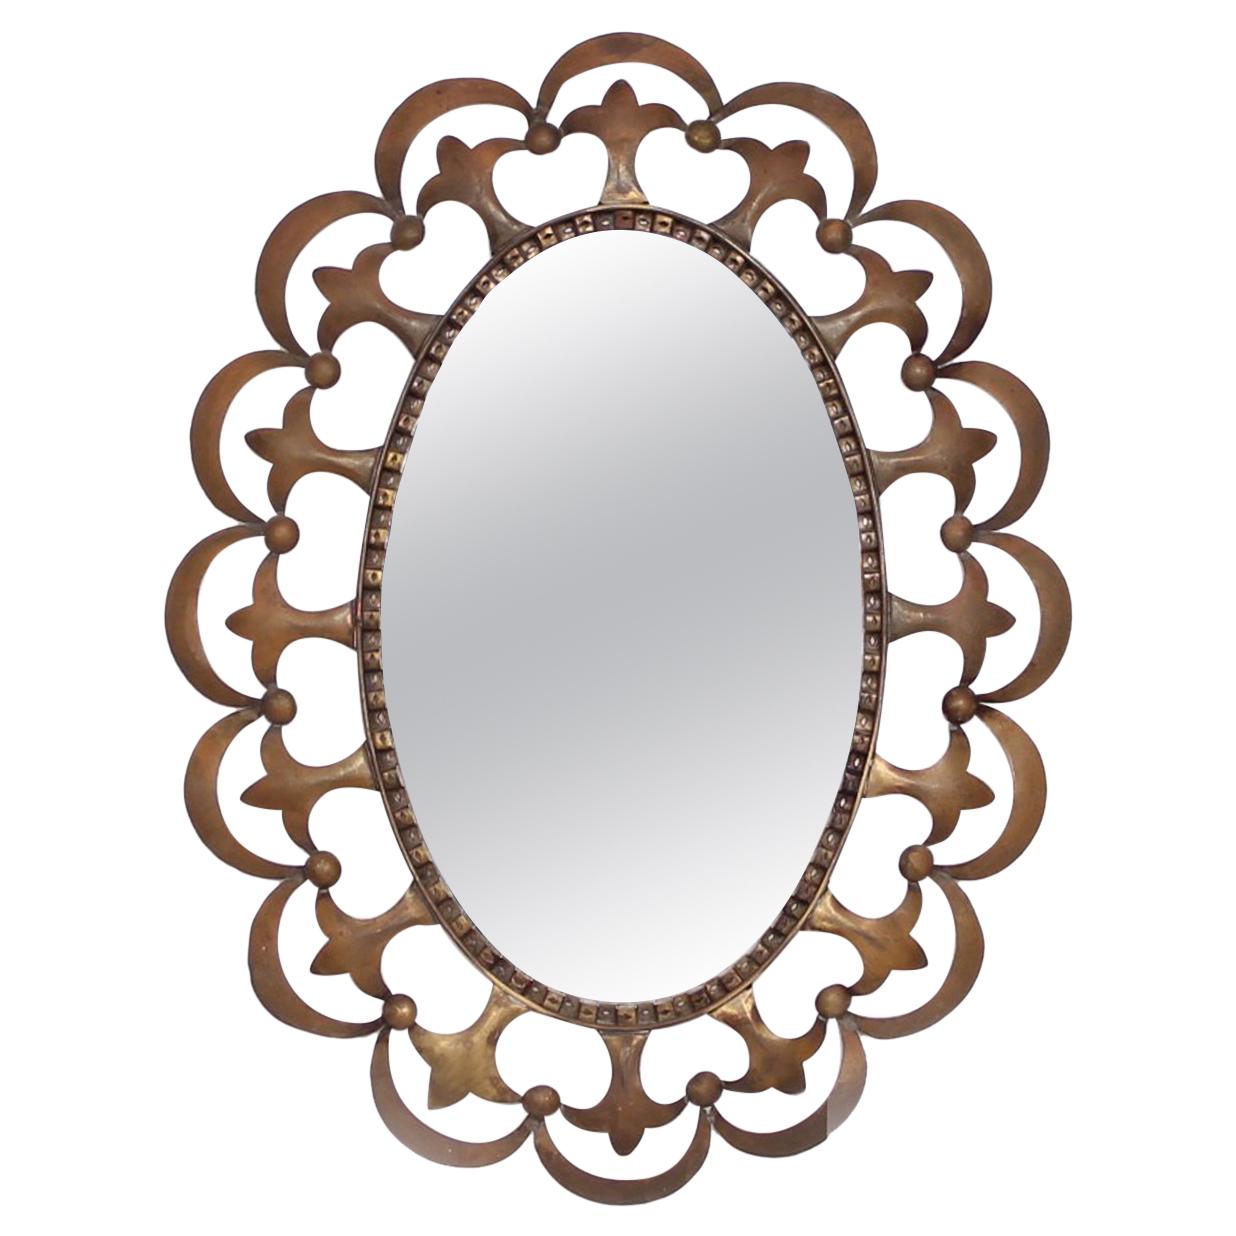 Labarge Regency Fleur-de-Lis Oval Wall Mirror Solid Brass Subtle Ornate Detail